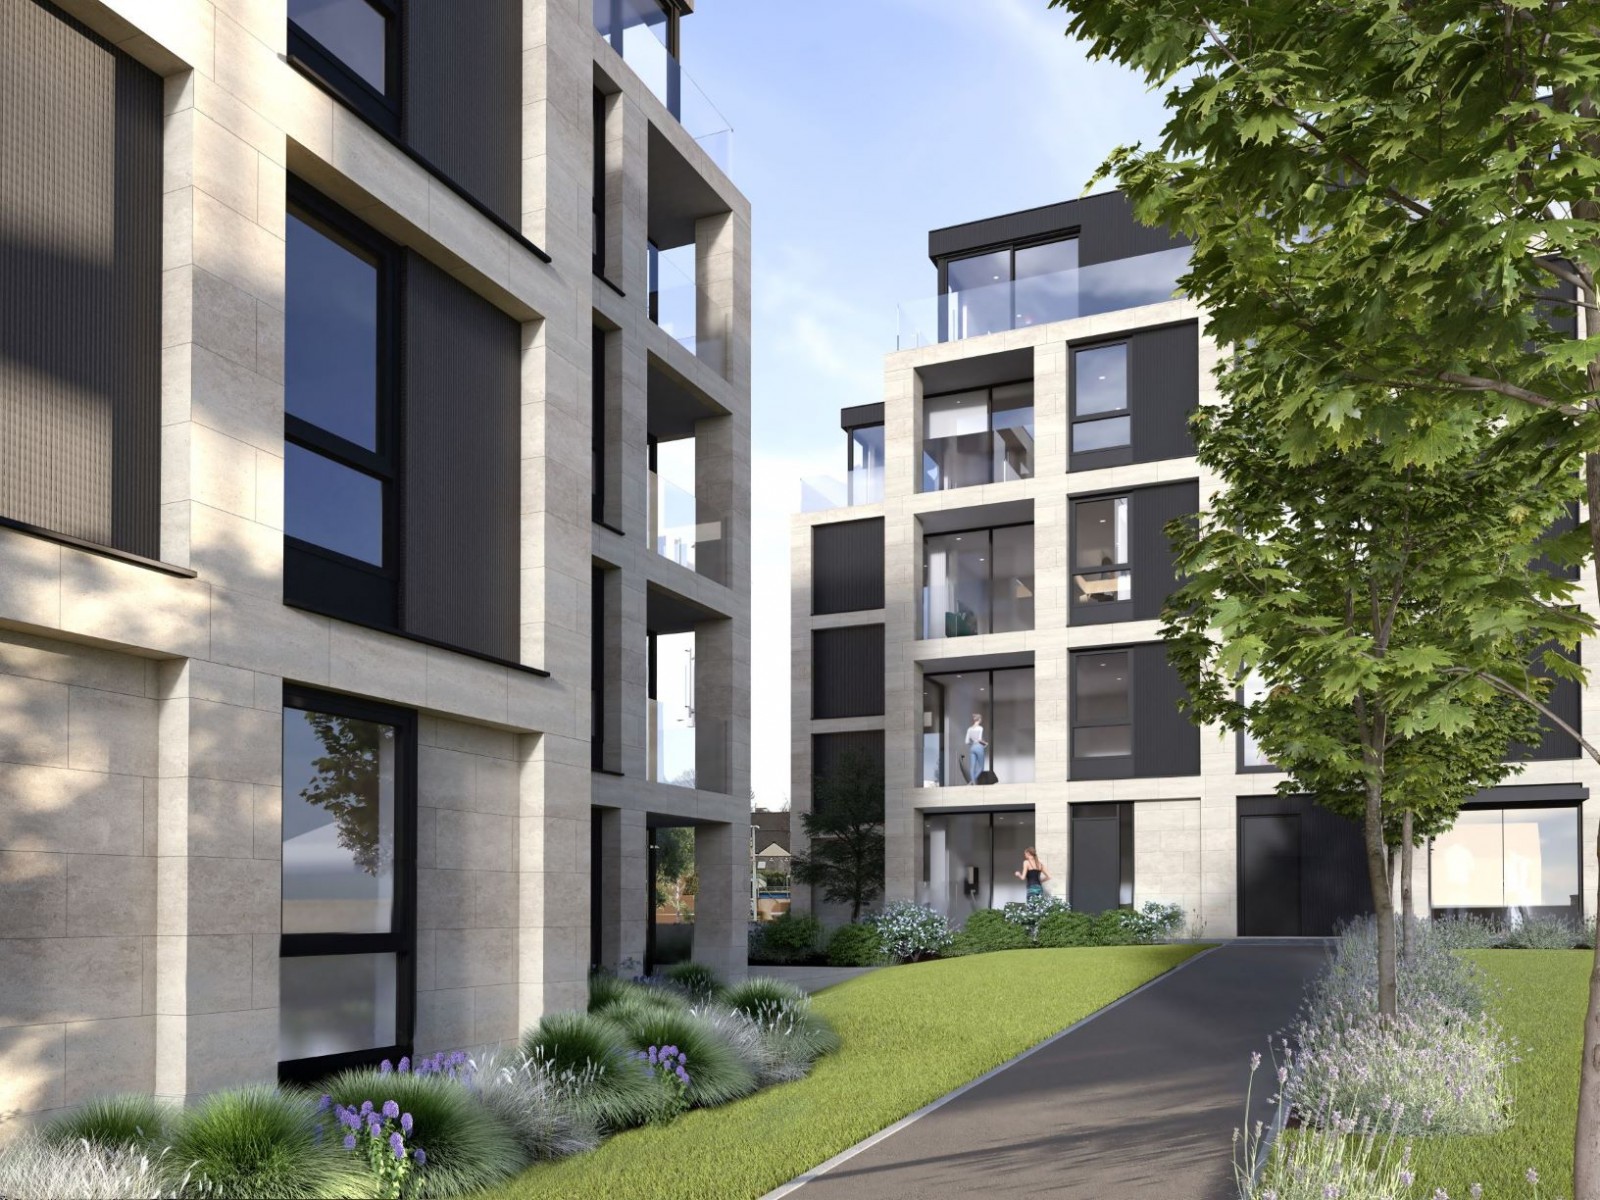 Apartment blocks planned for Edinburgh's Northfield district